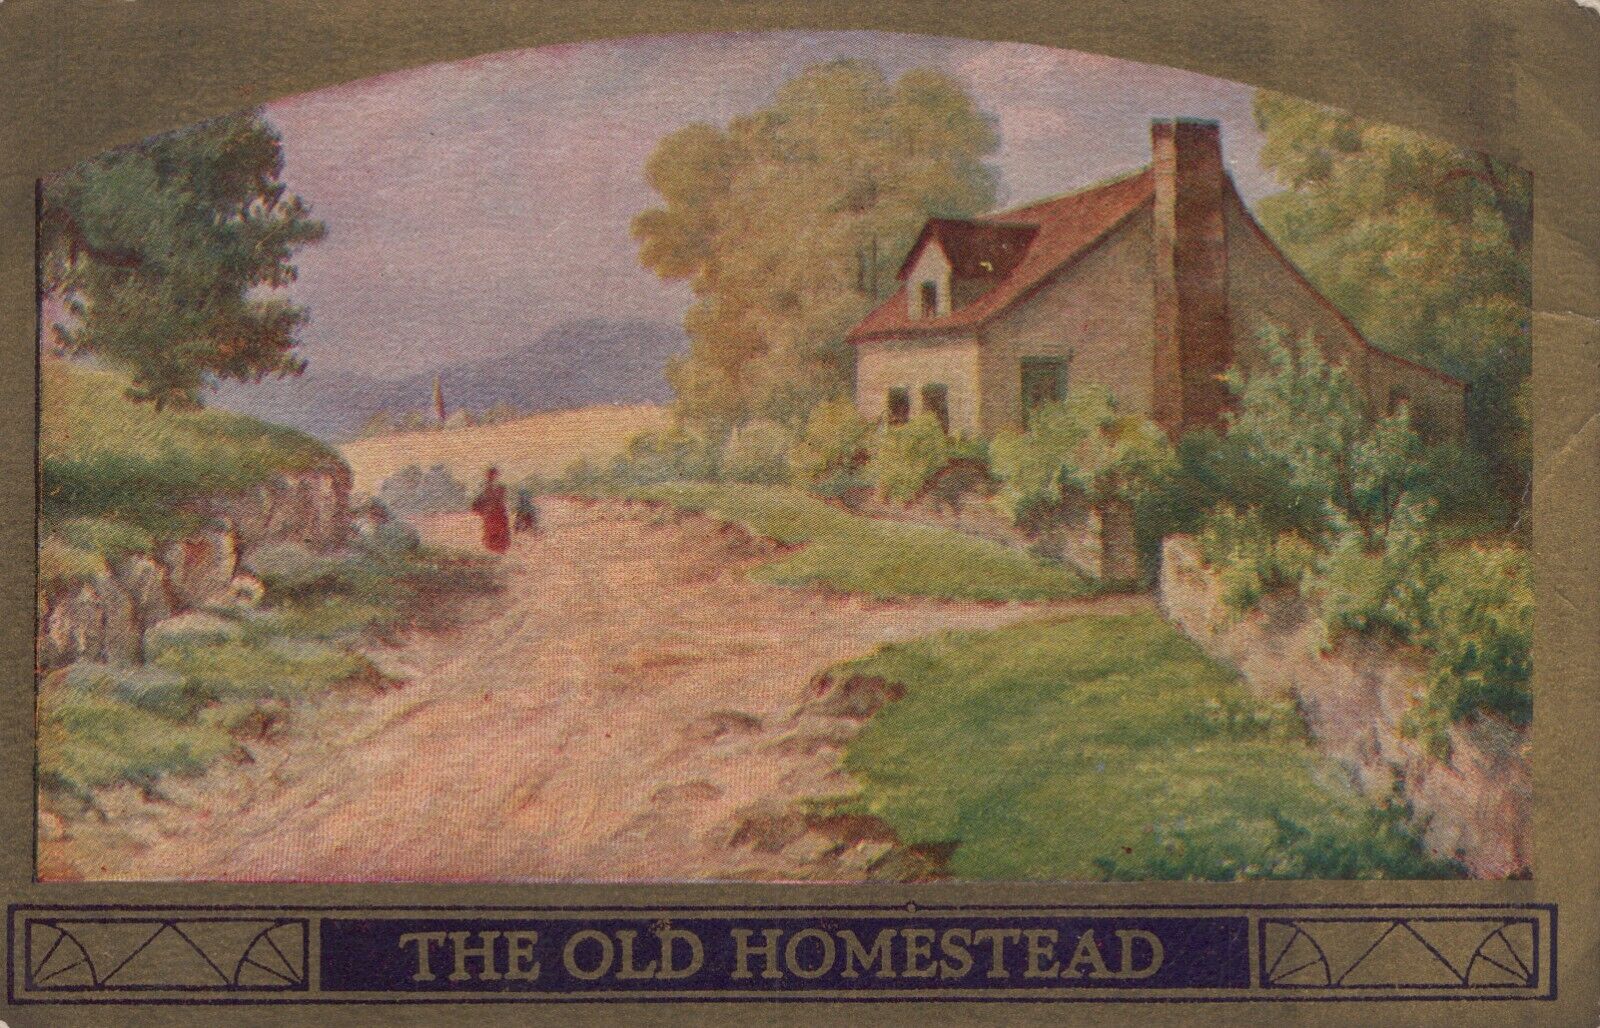 The Old Homestead Scenic Cottage Nature Scene Vintage Divided Back Post Card